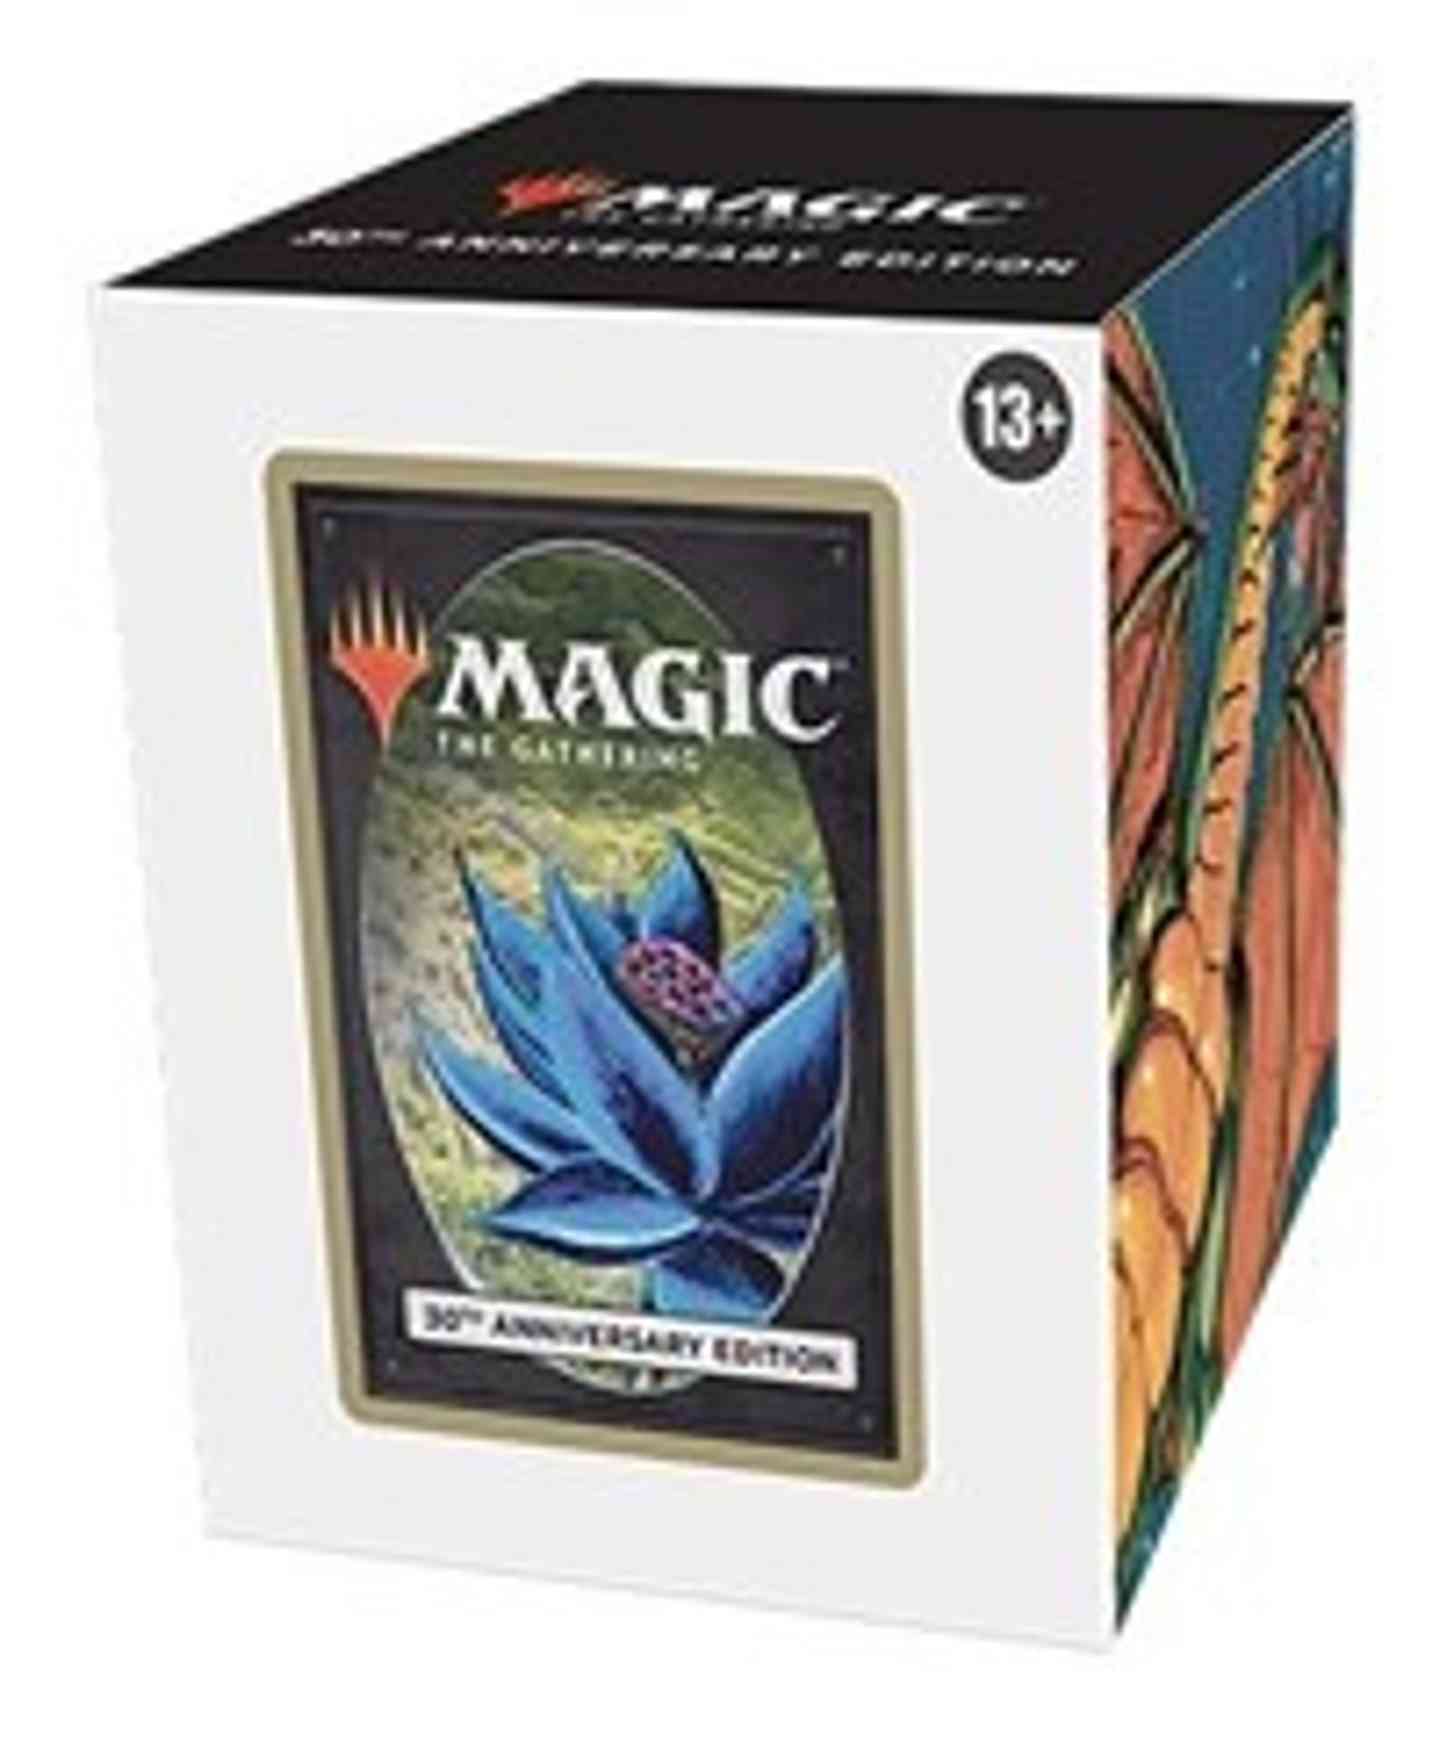 30th Anniversary Edition Display magic card front